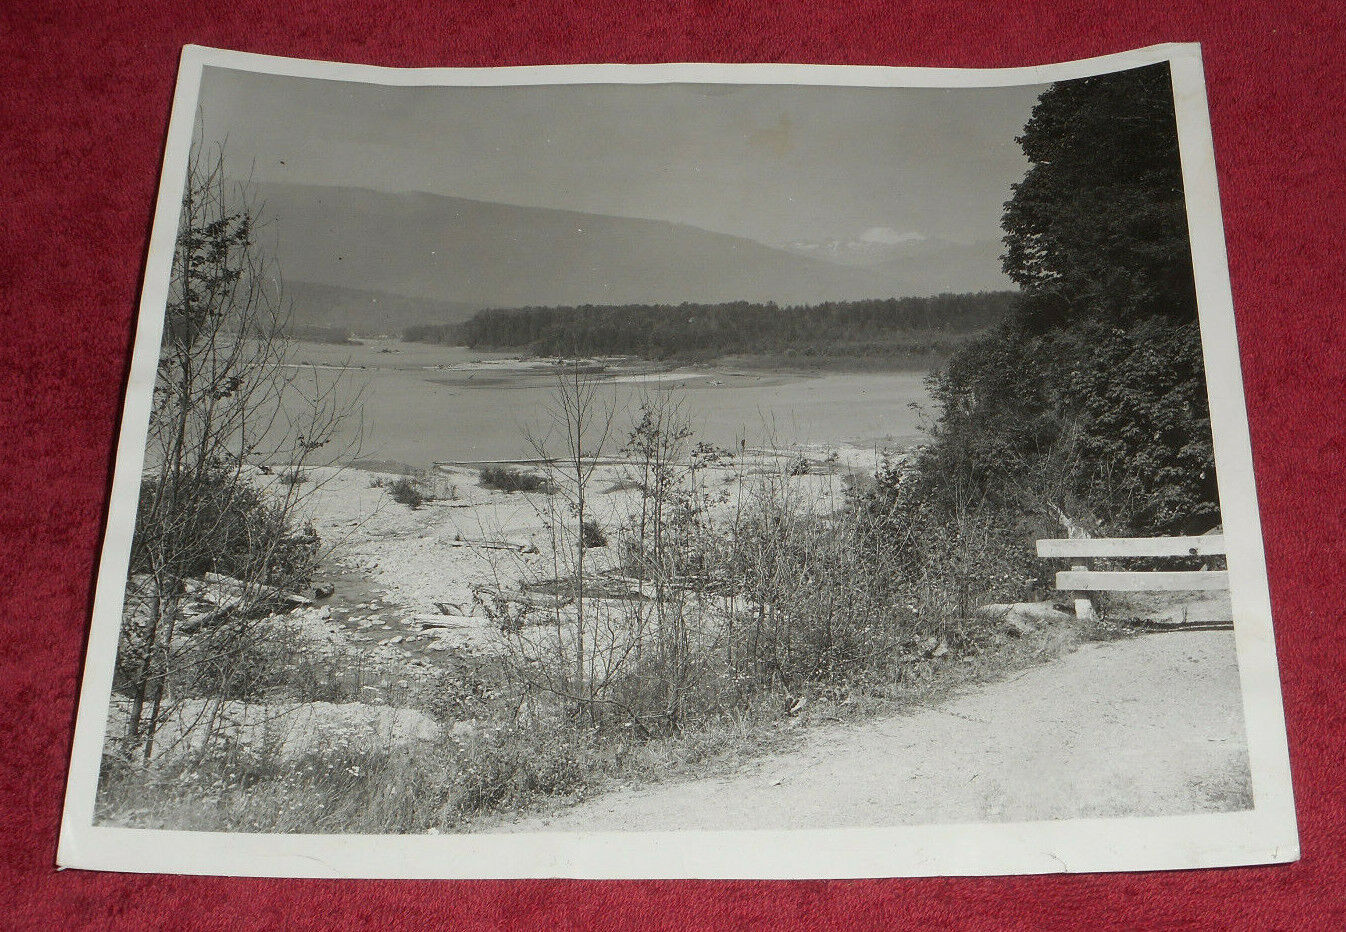 1956 Press Photo Skagit River Cascades & Foothills View Near Concrete Washington